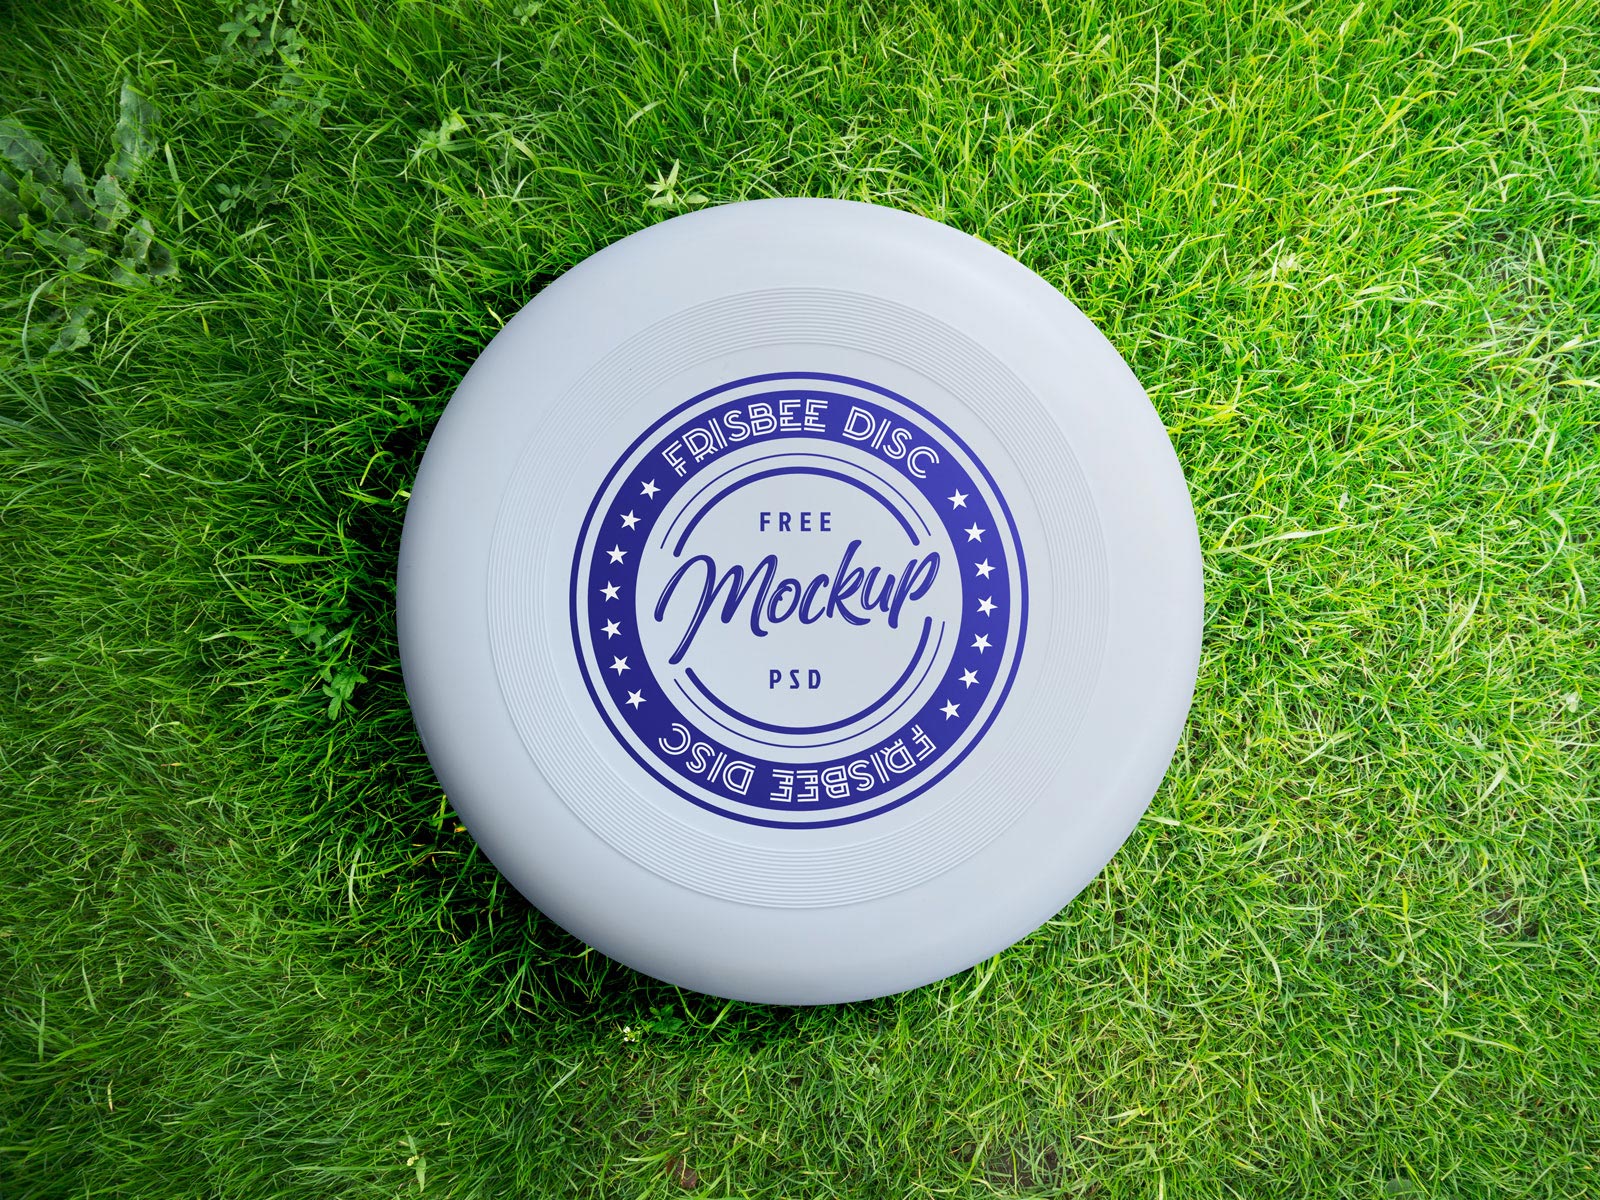 Free-Frisbee-Disc-Mockup-PSD